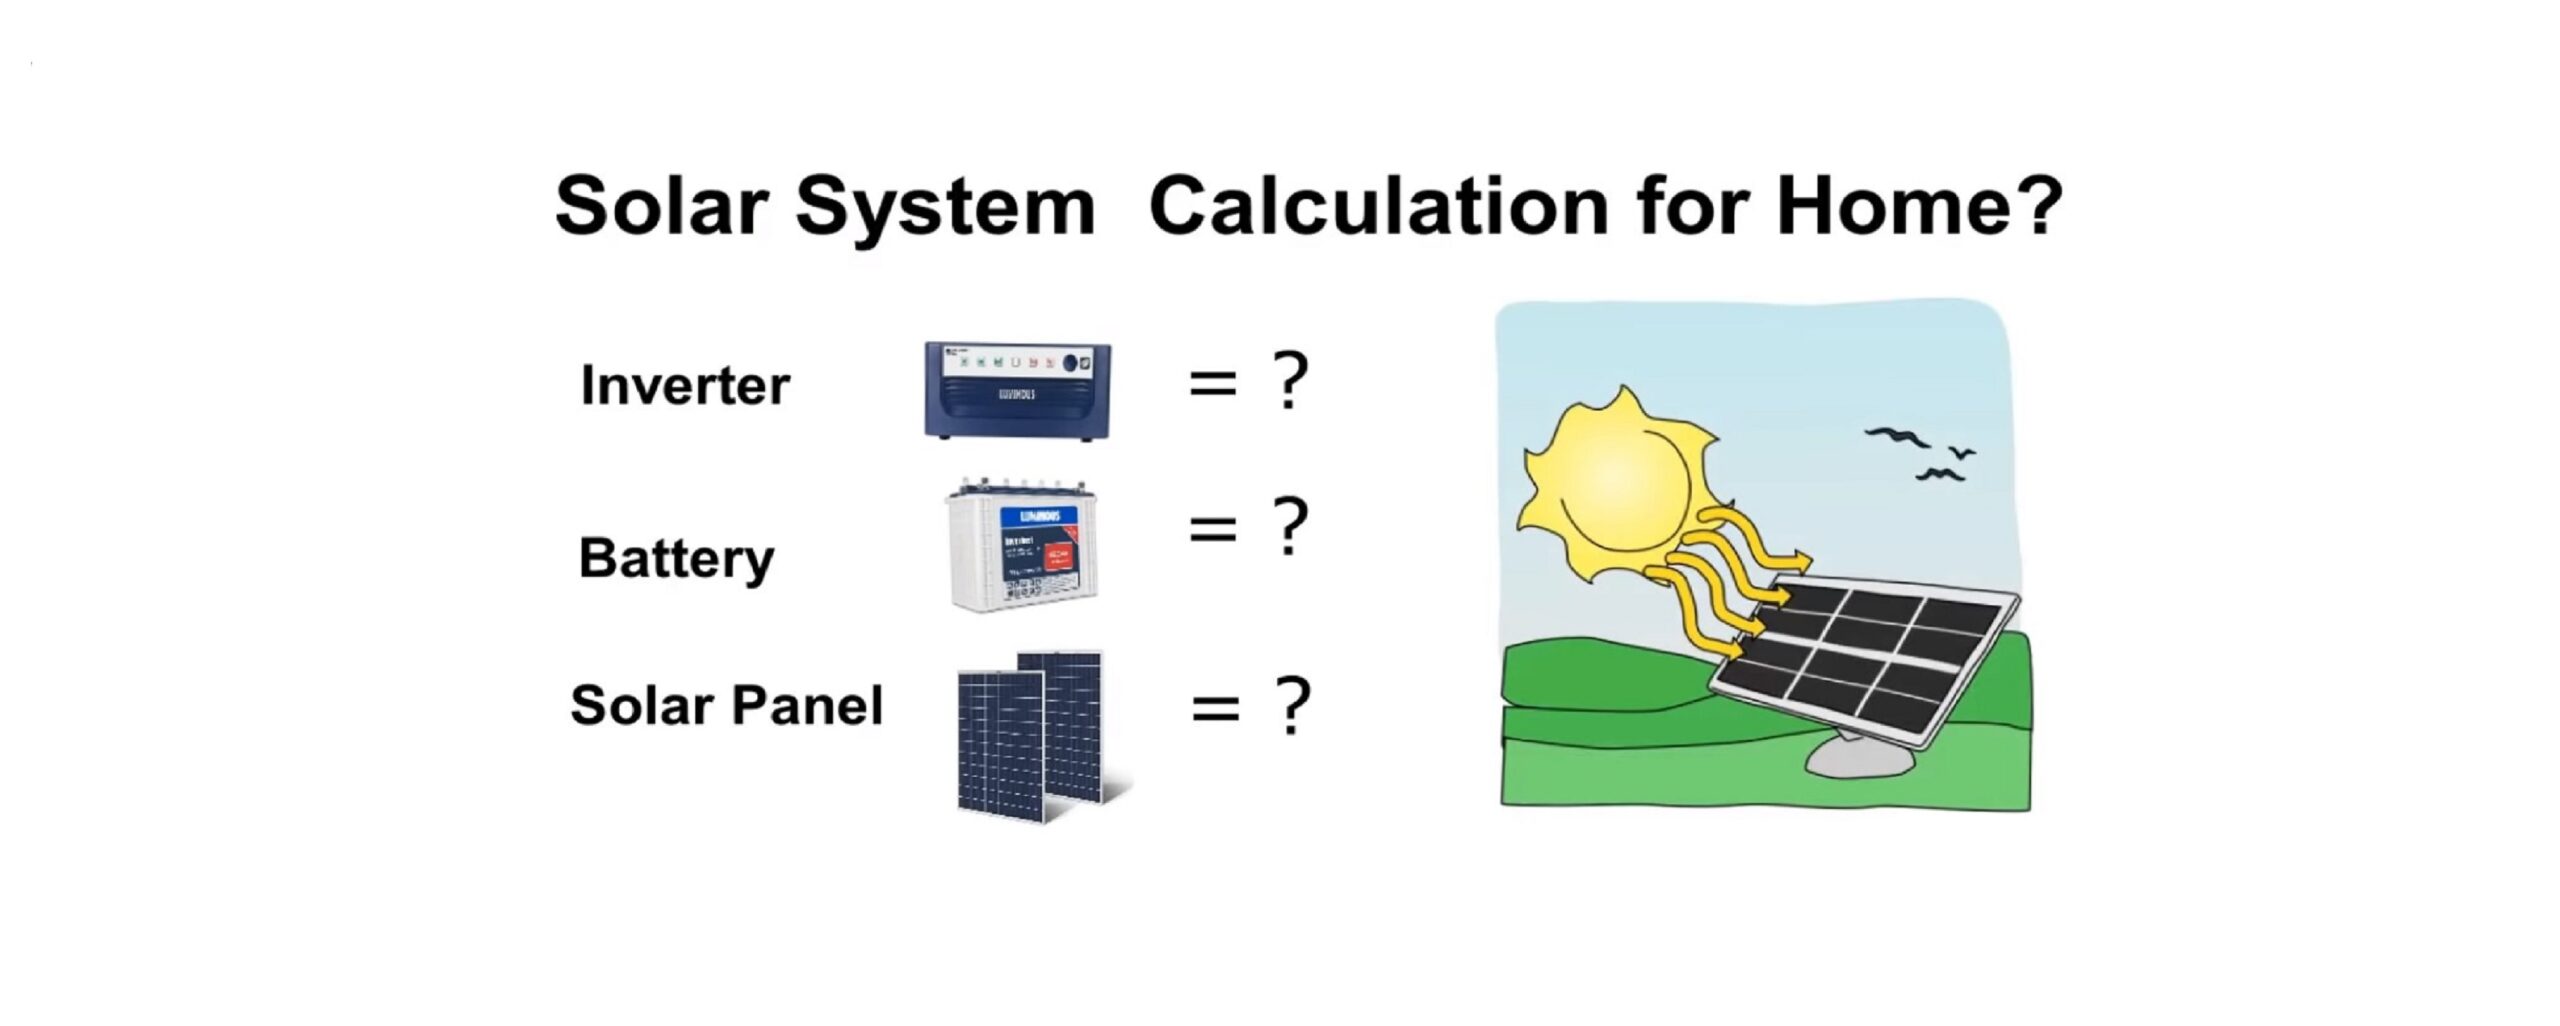 Solar Panel calculation